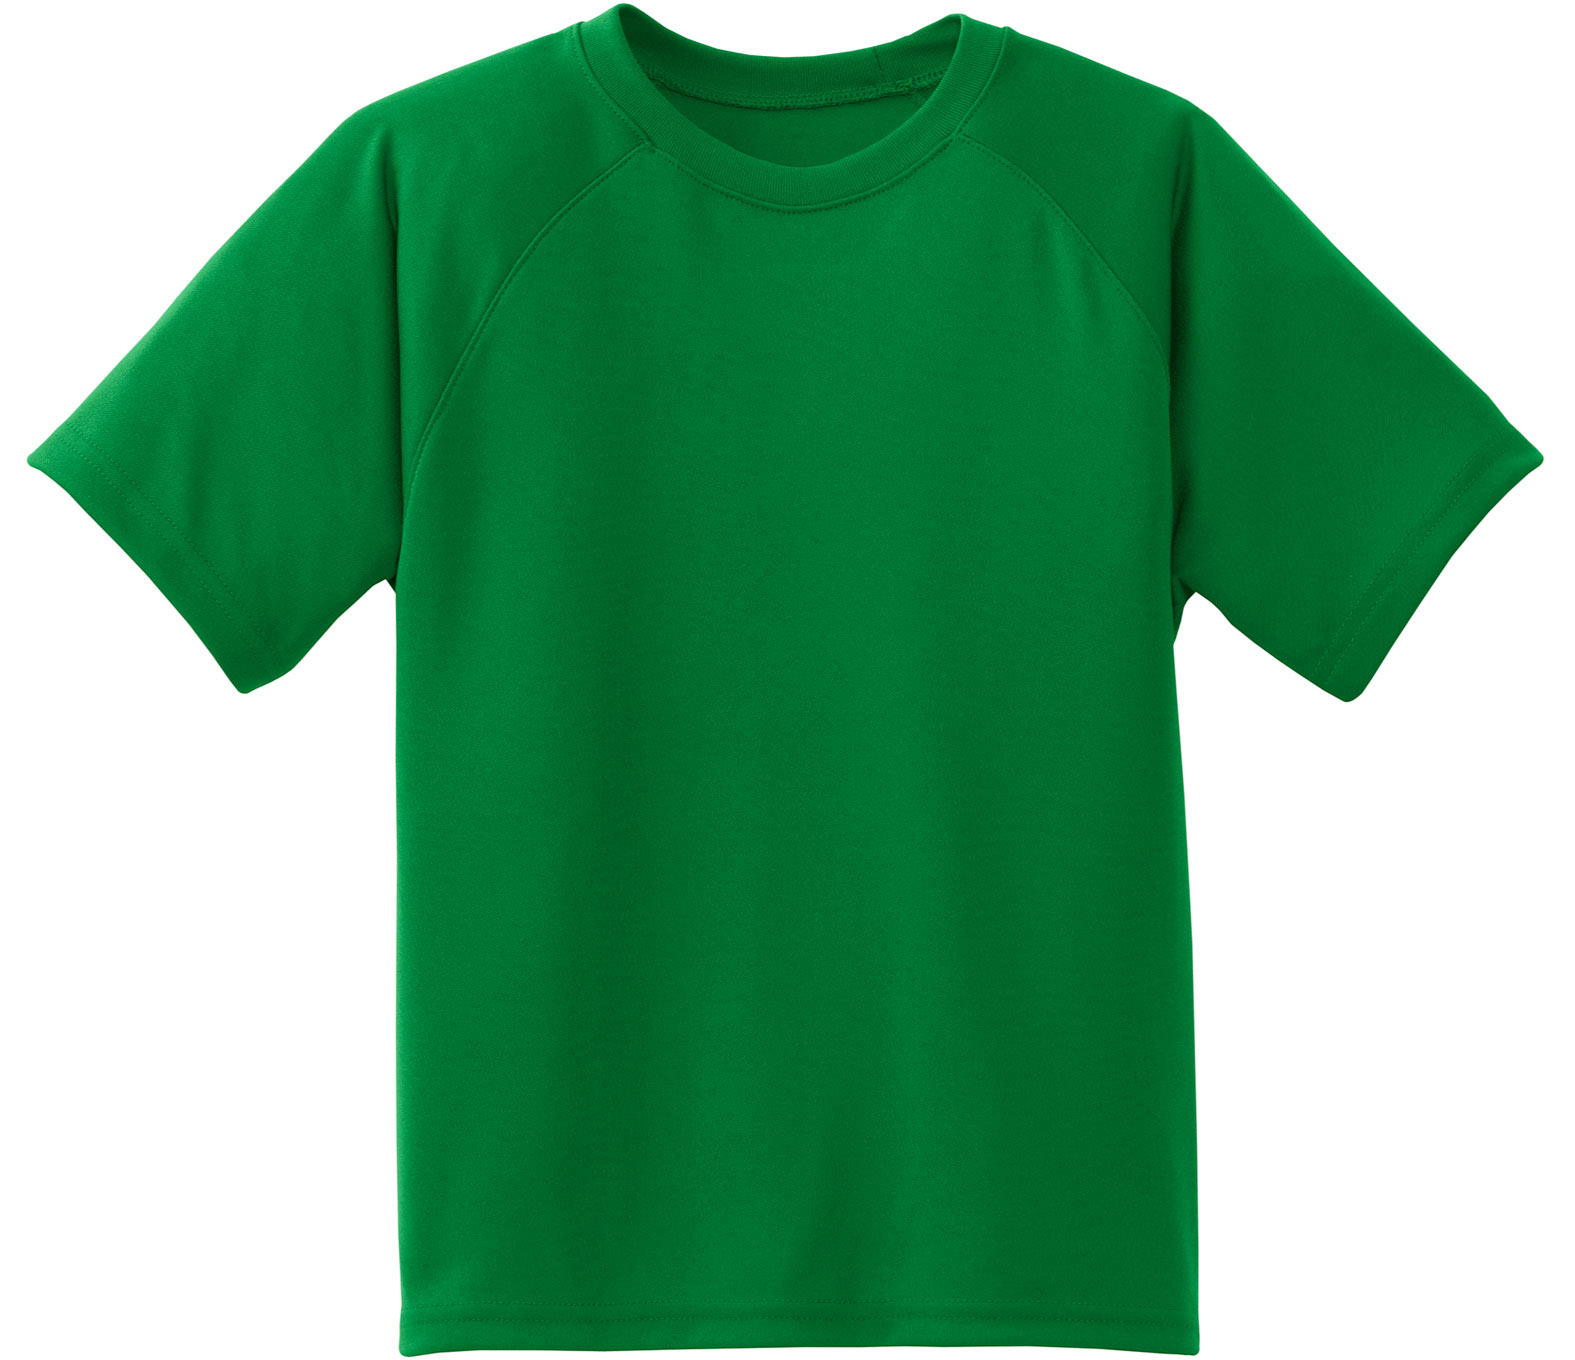 Green T Shirt Front And Back | estudioespositoymiguel.com.ar